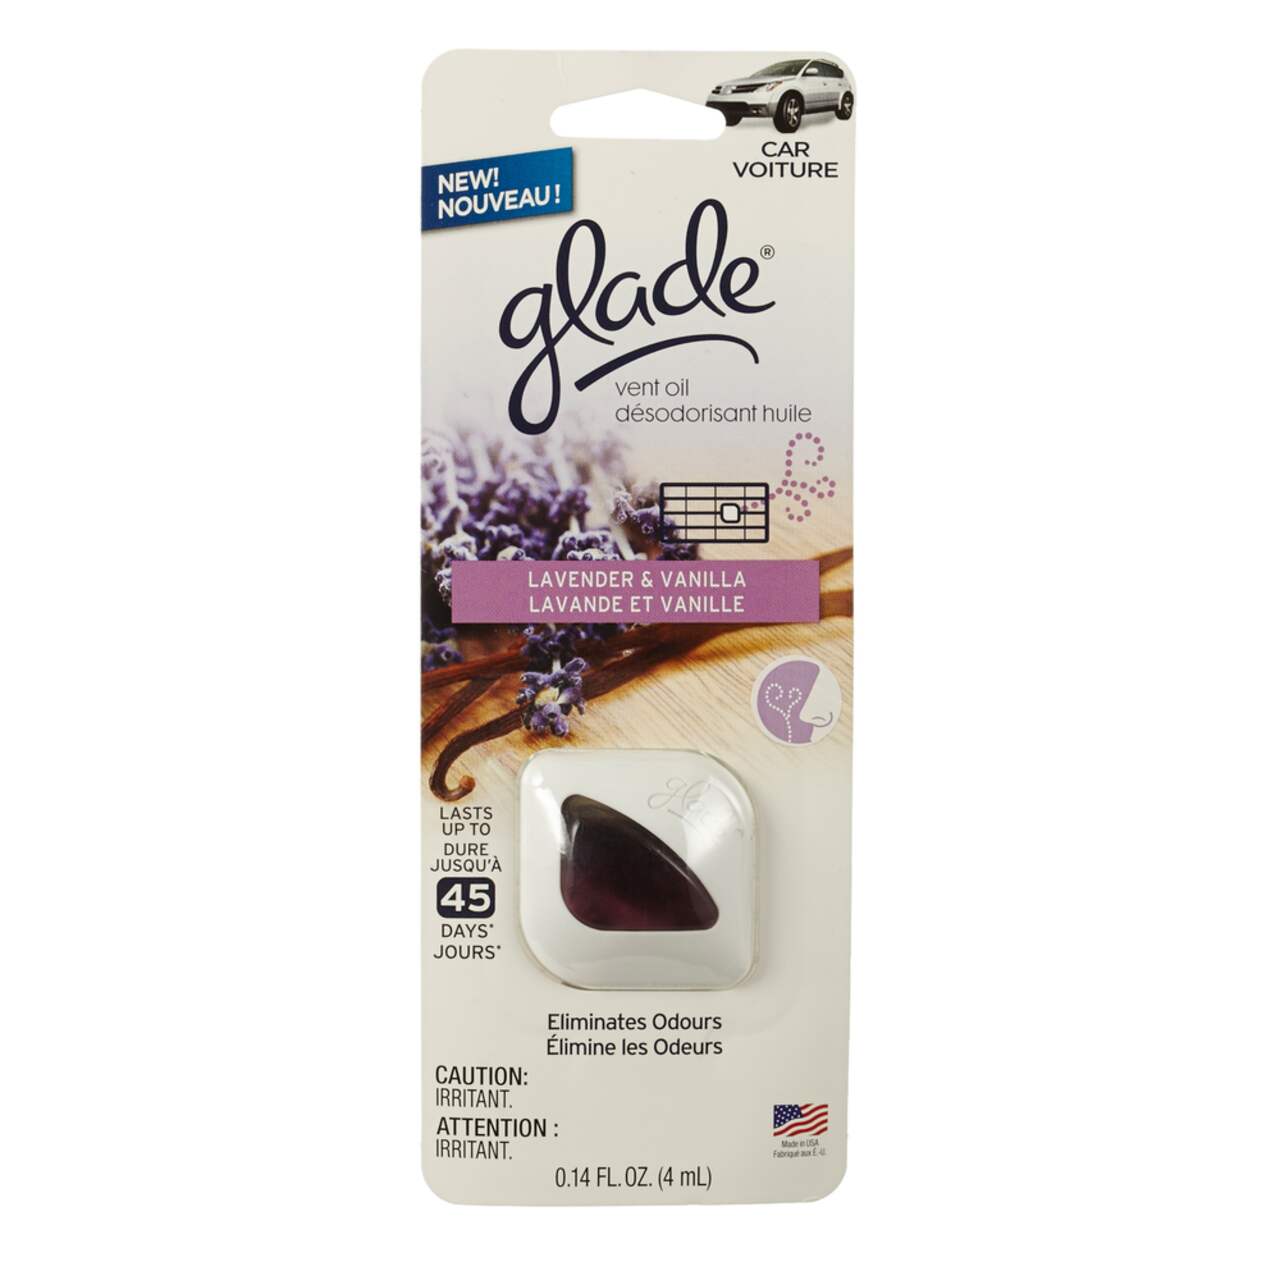 Glade Vent Oil Car Air Freshener, Lavender & Vanilla